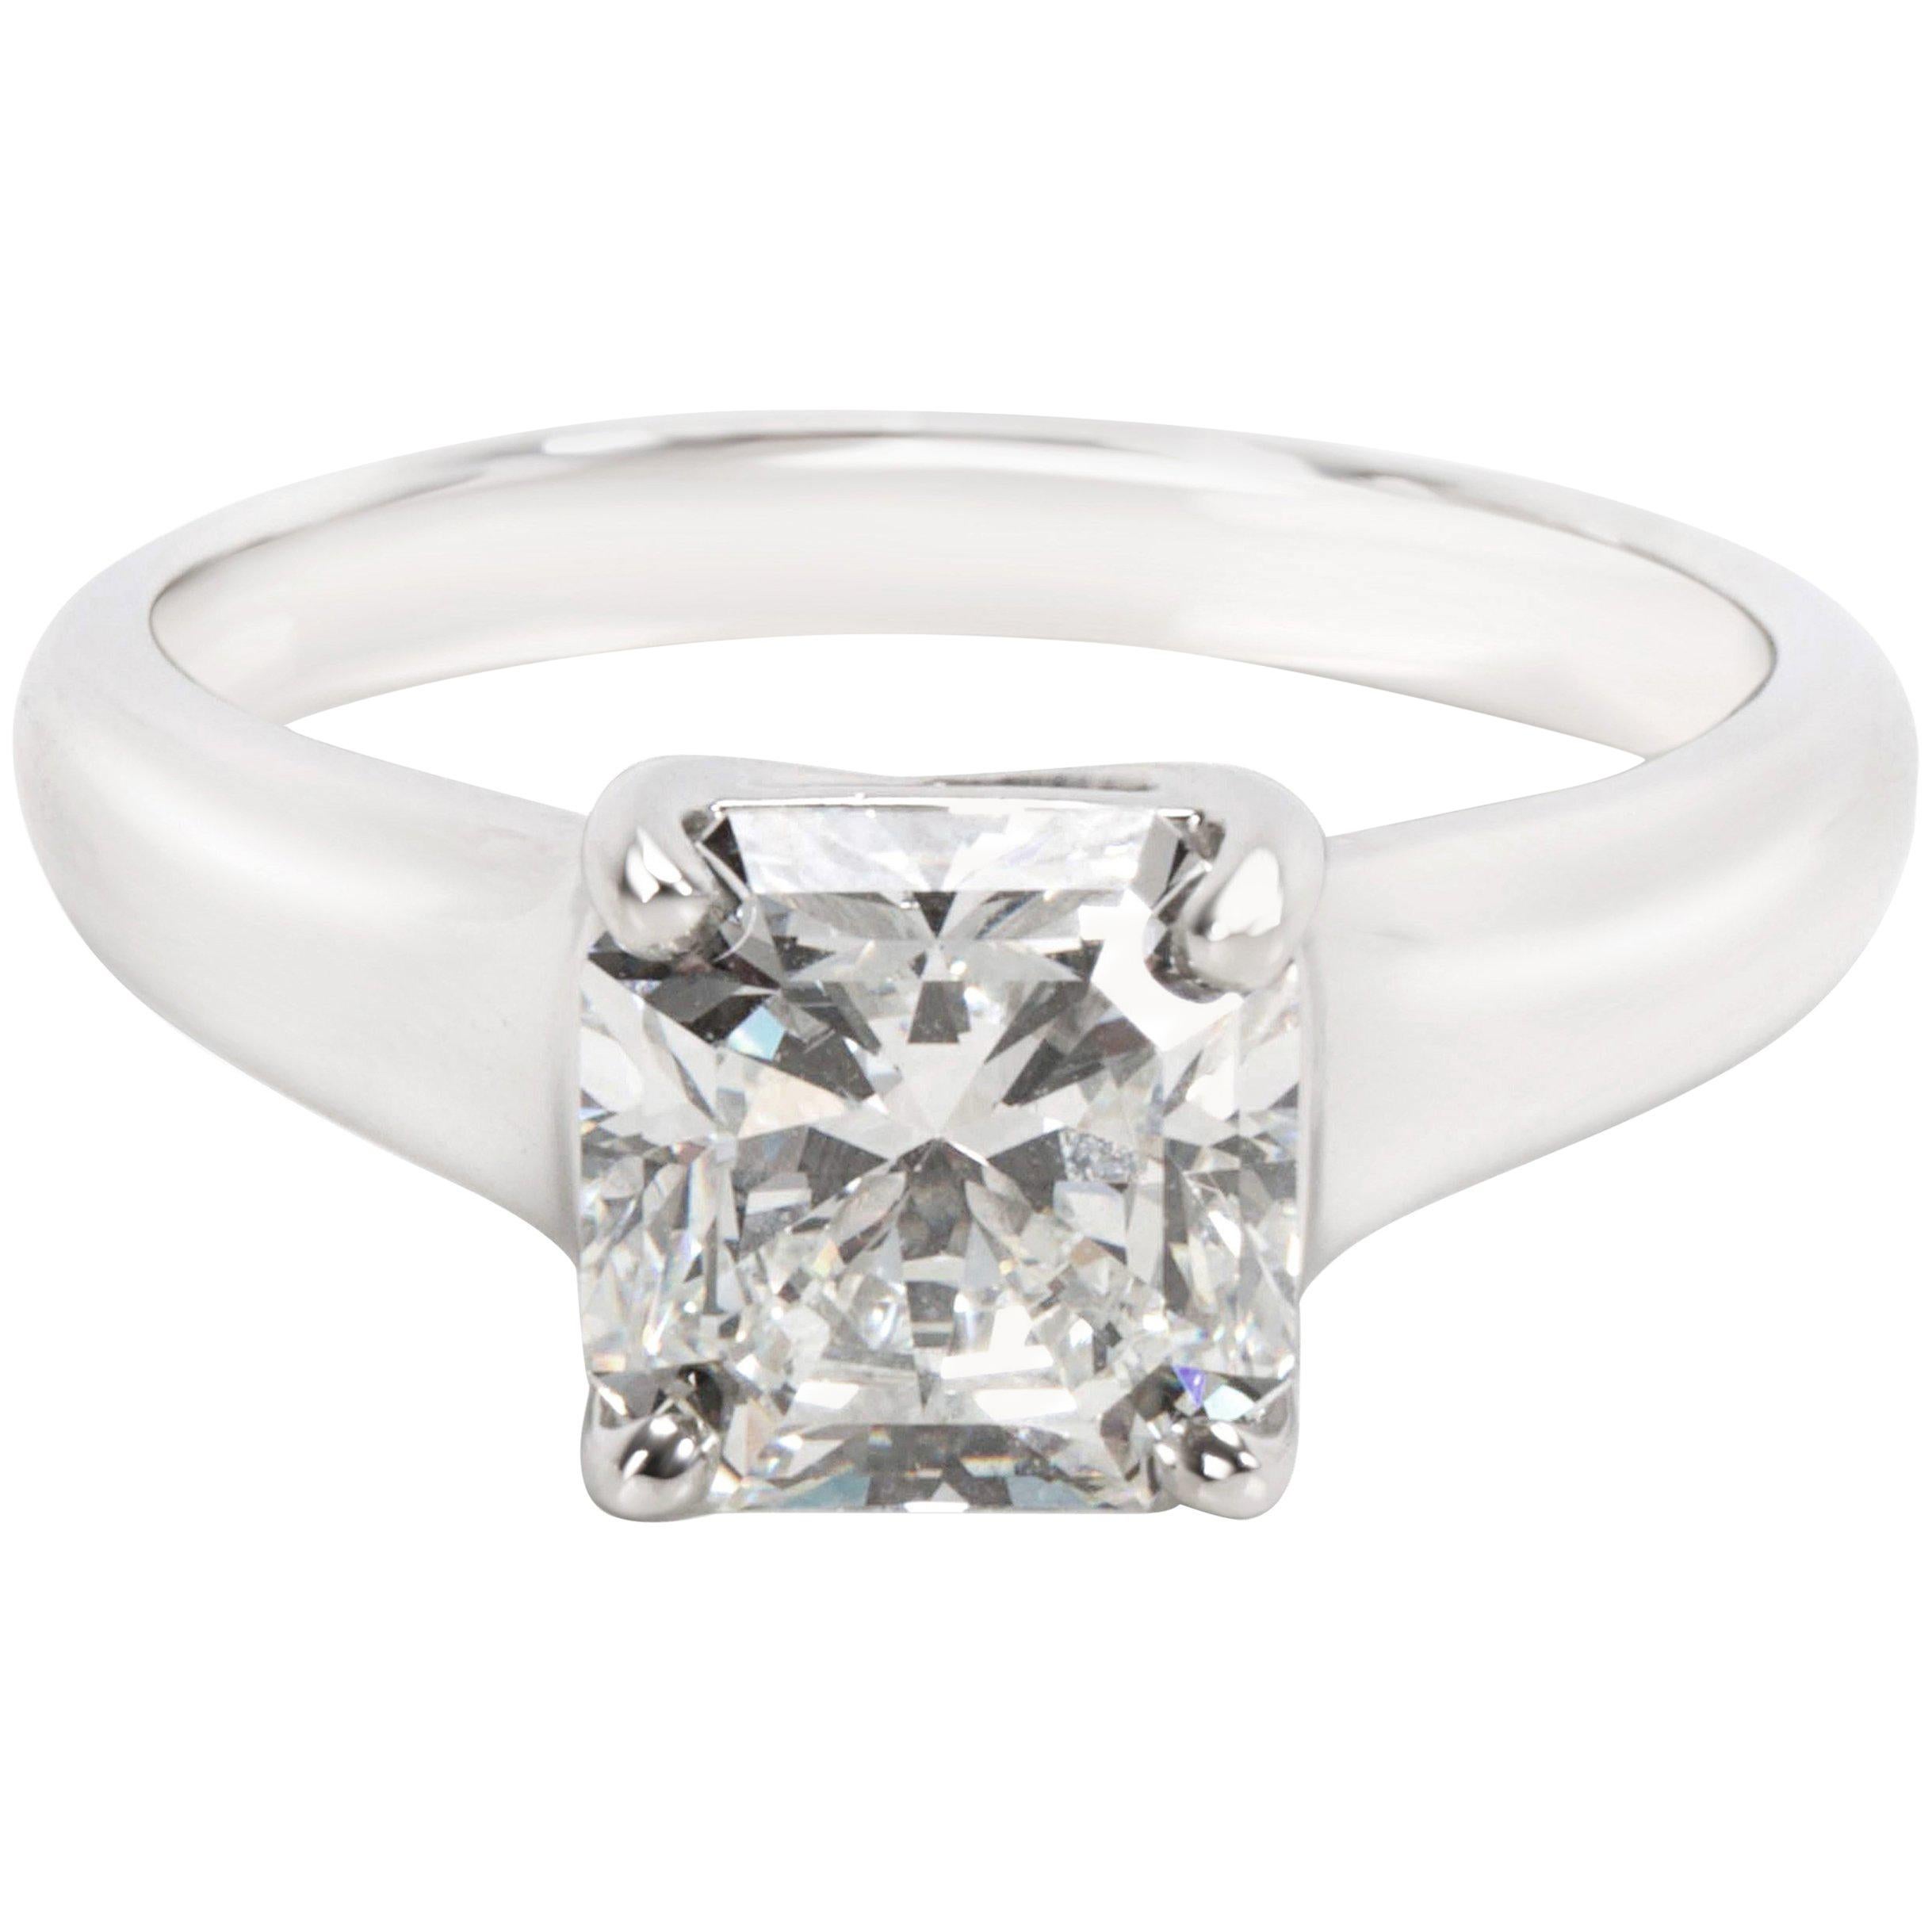 Tiffany & Co. Lucida Cut Diamond Engagement Ring in Platinum G VS1 2.03 Carat